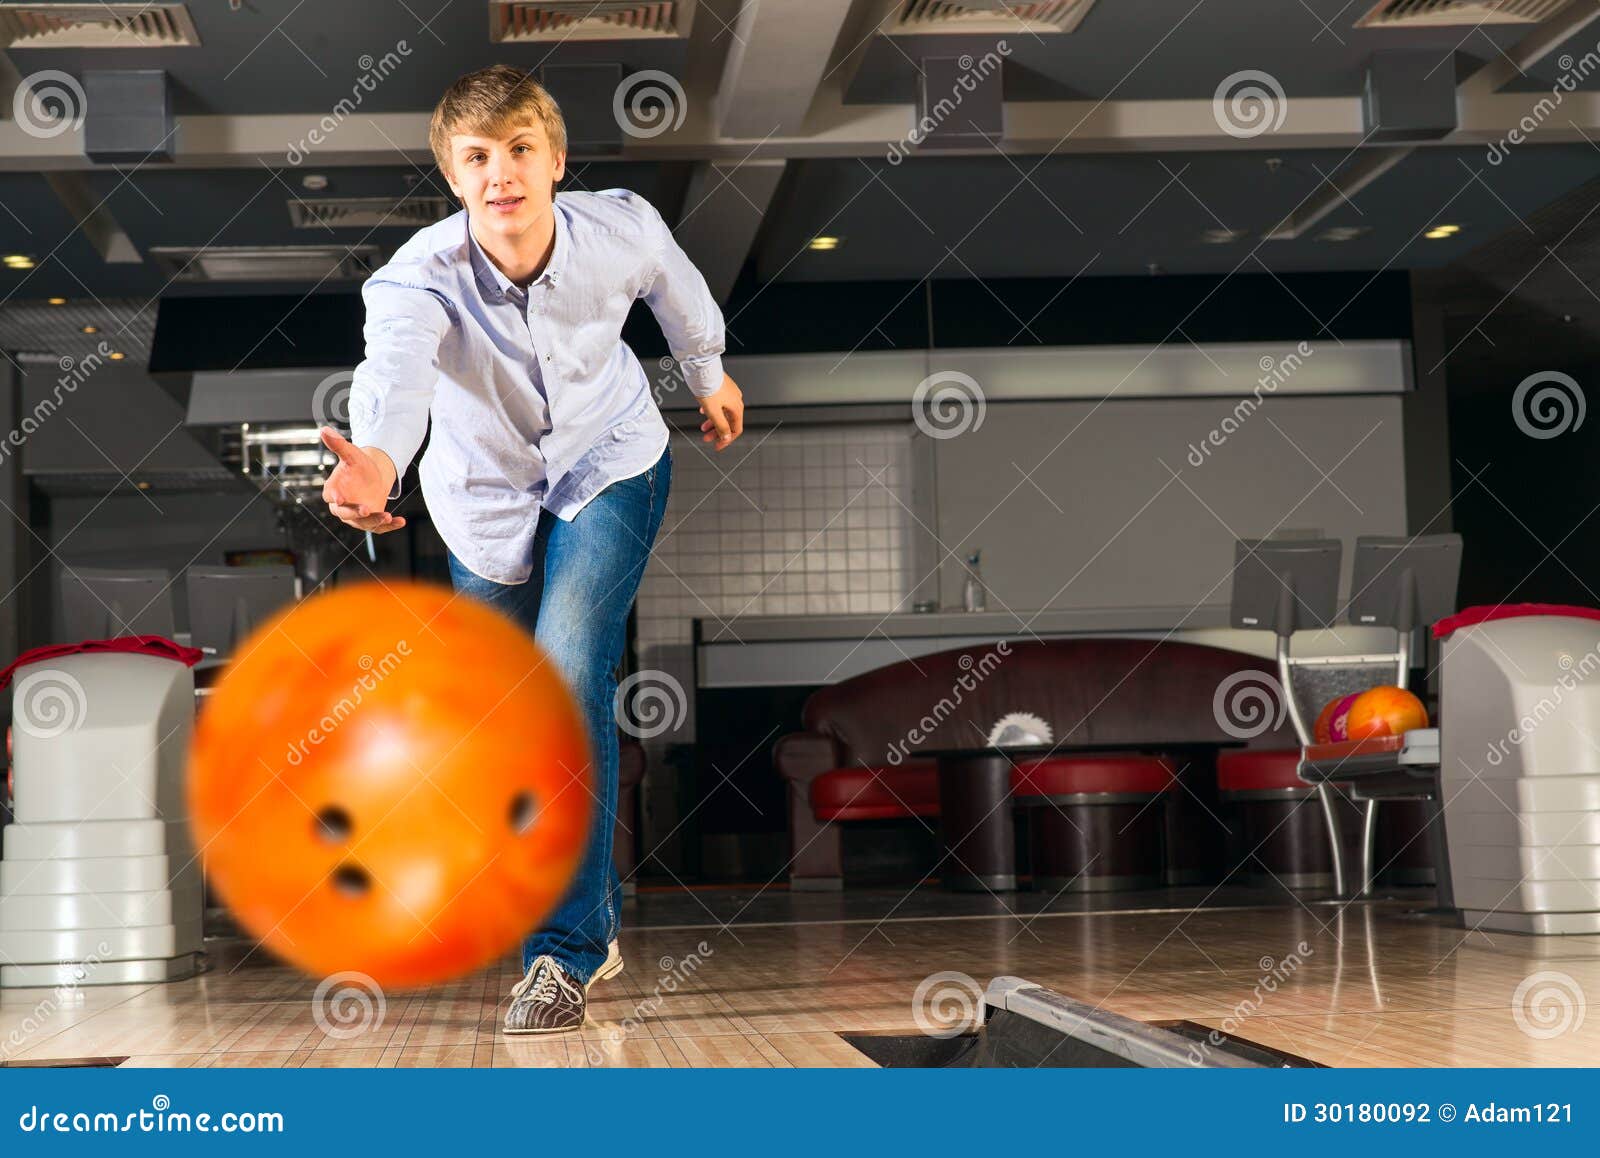 Бросание шаров. Человек с шаром для боулинга. Кинул шар боулинг. Мужик кидает шар для боулинга. Чел кидает боулинговый шар.